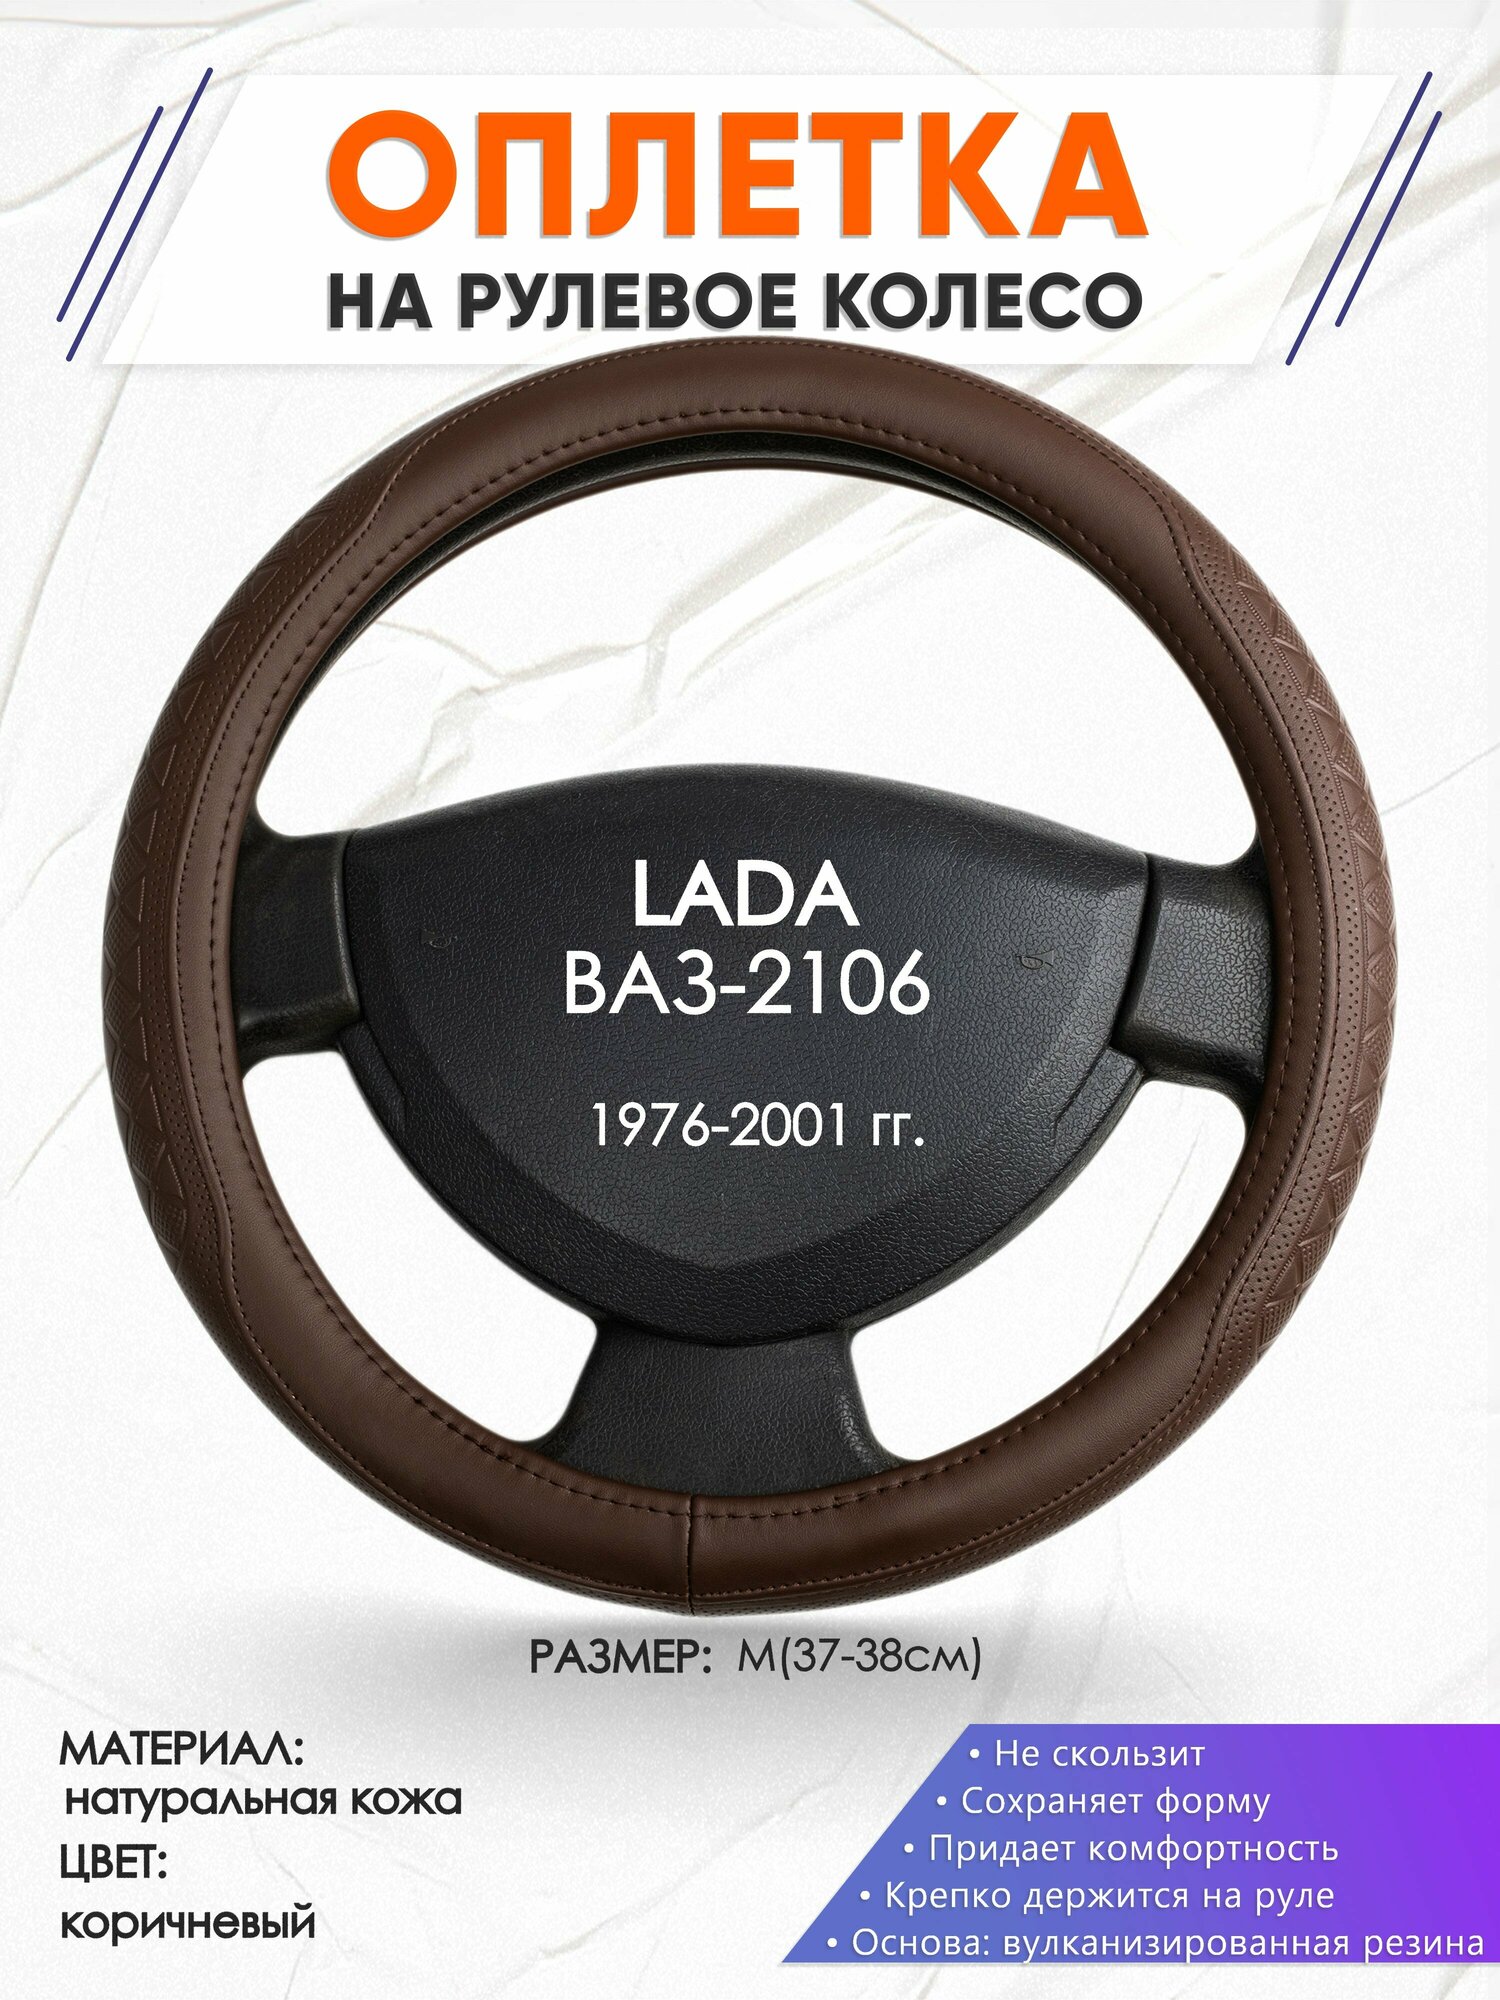 Оплетка наруль для LADA ВАЗ-2106(Лада ВАЗ-2106) 1976-2001 годов выпуска, размер M(37-38см), Натуральная кожа 88